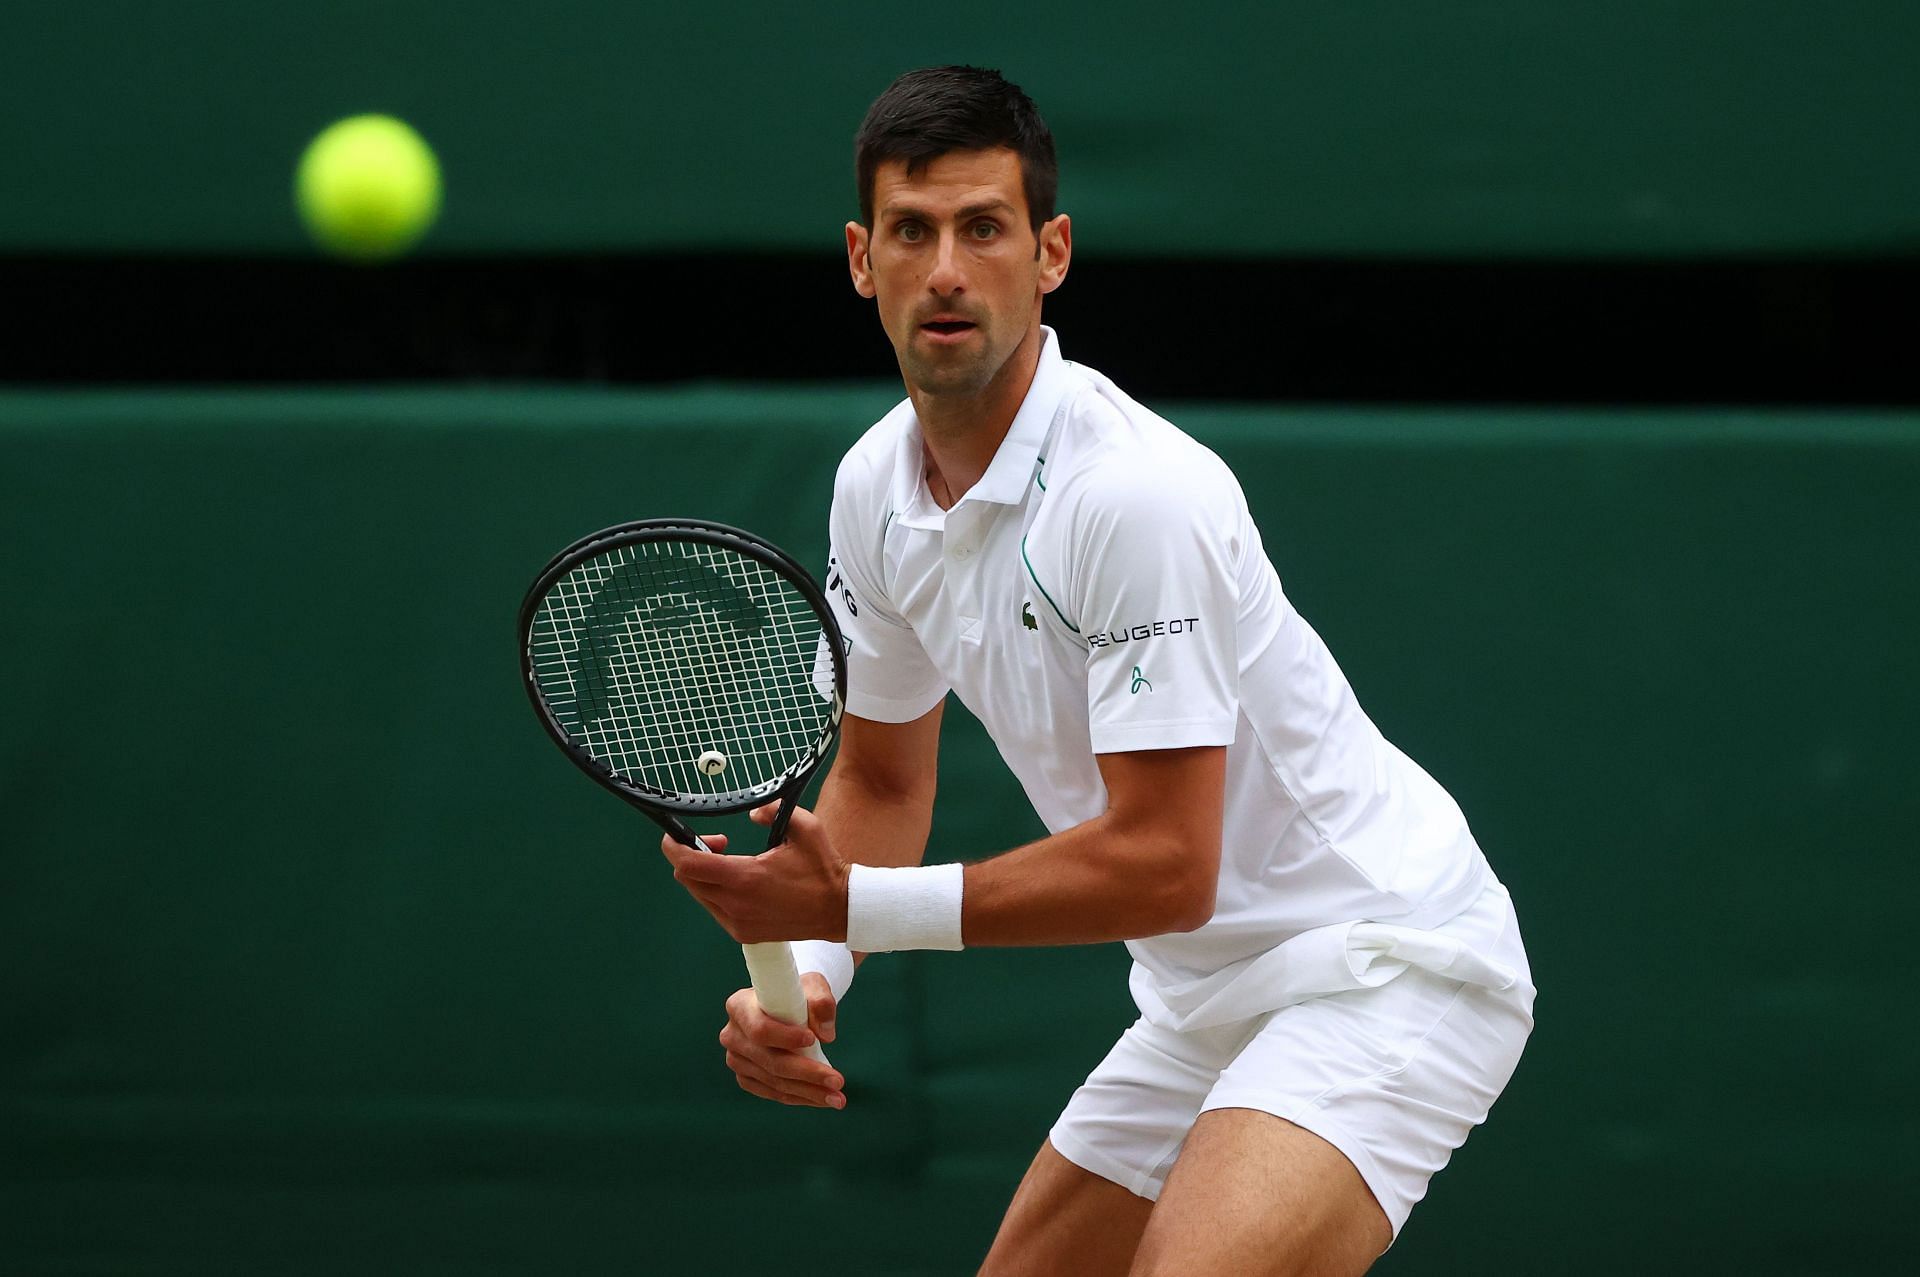 Novak Djokovic won the last three editions of Wimbledon